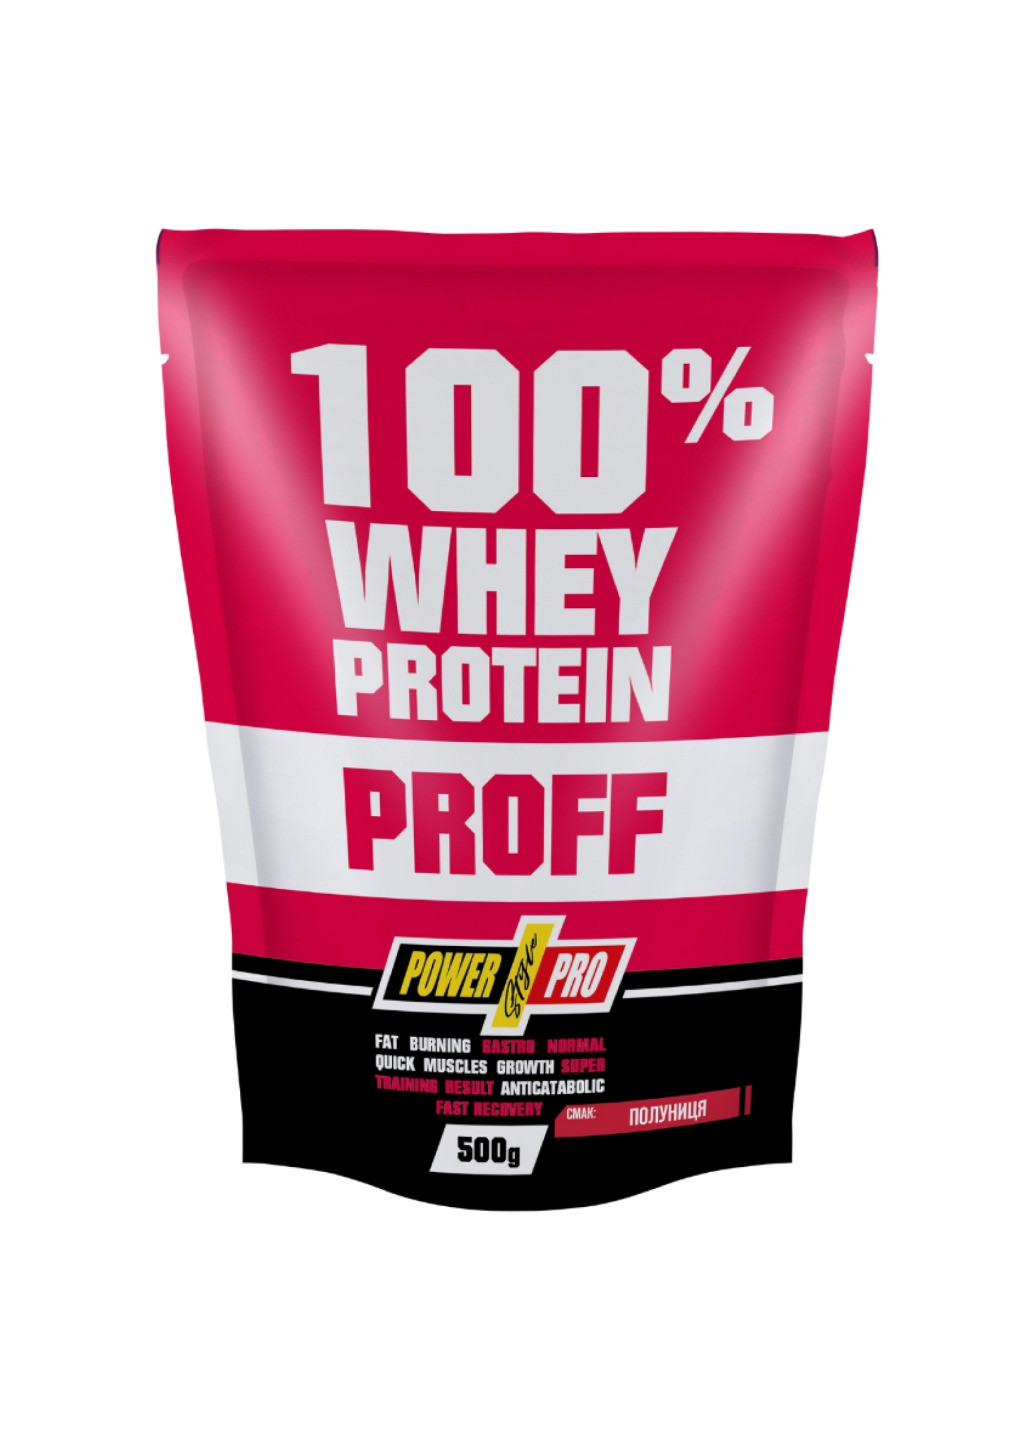 Протеин 100% Whey Protein Proff - 500g Strawberry Power Pro (270007733)